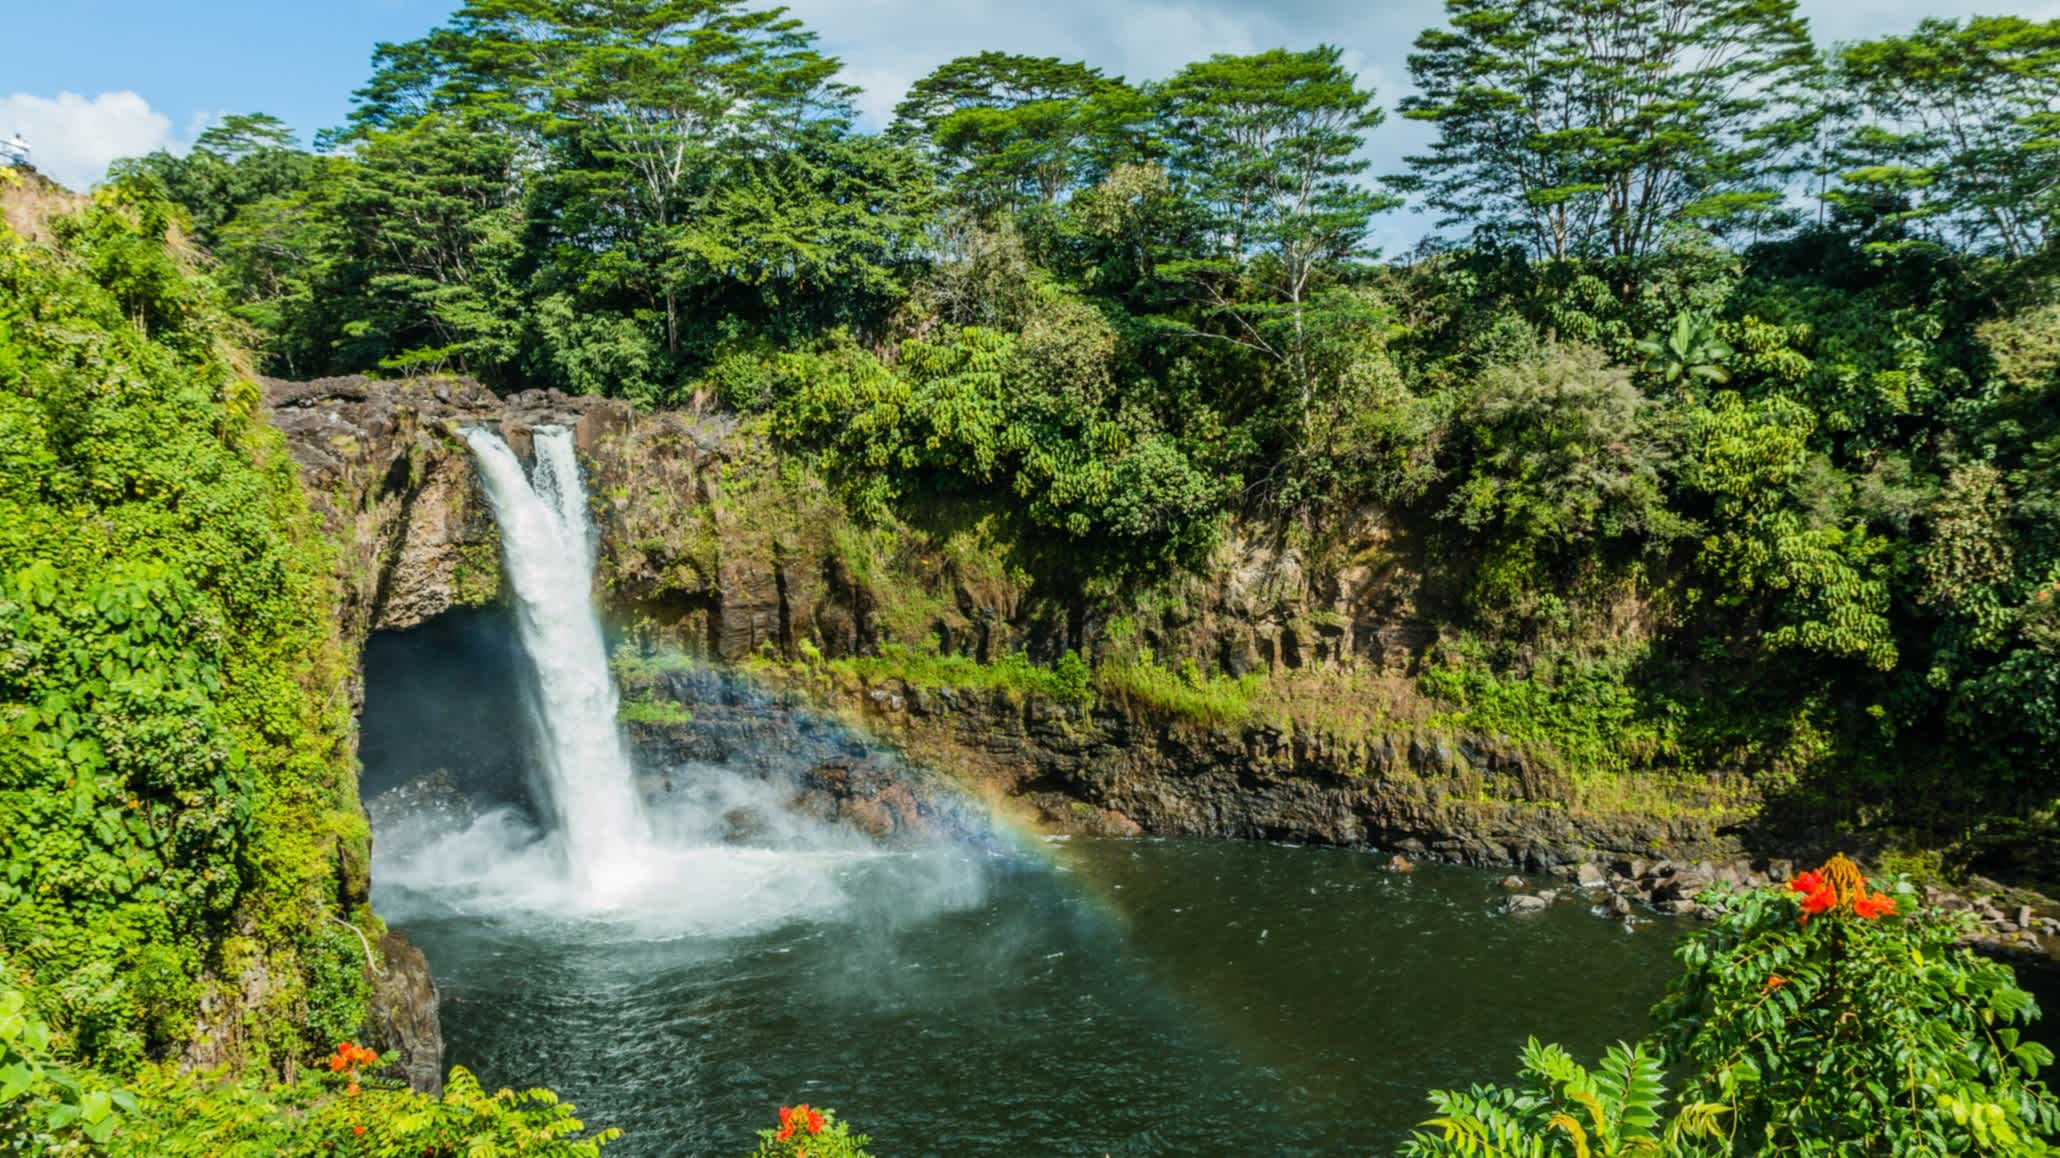 Blick auf den Rainbow Falls in Hilo, Wailuku River State Park,  Hawaii Island, USA.

